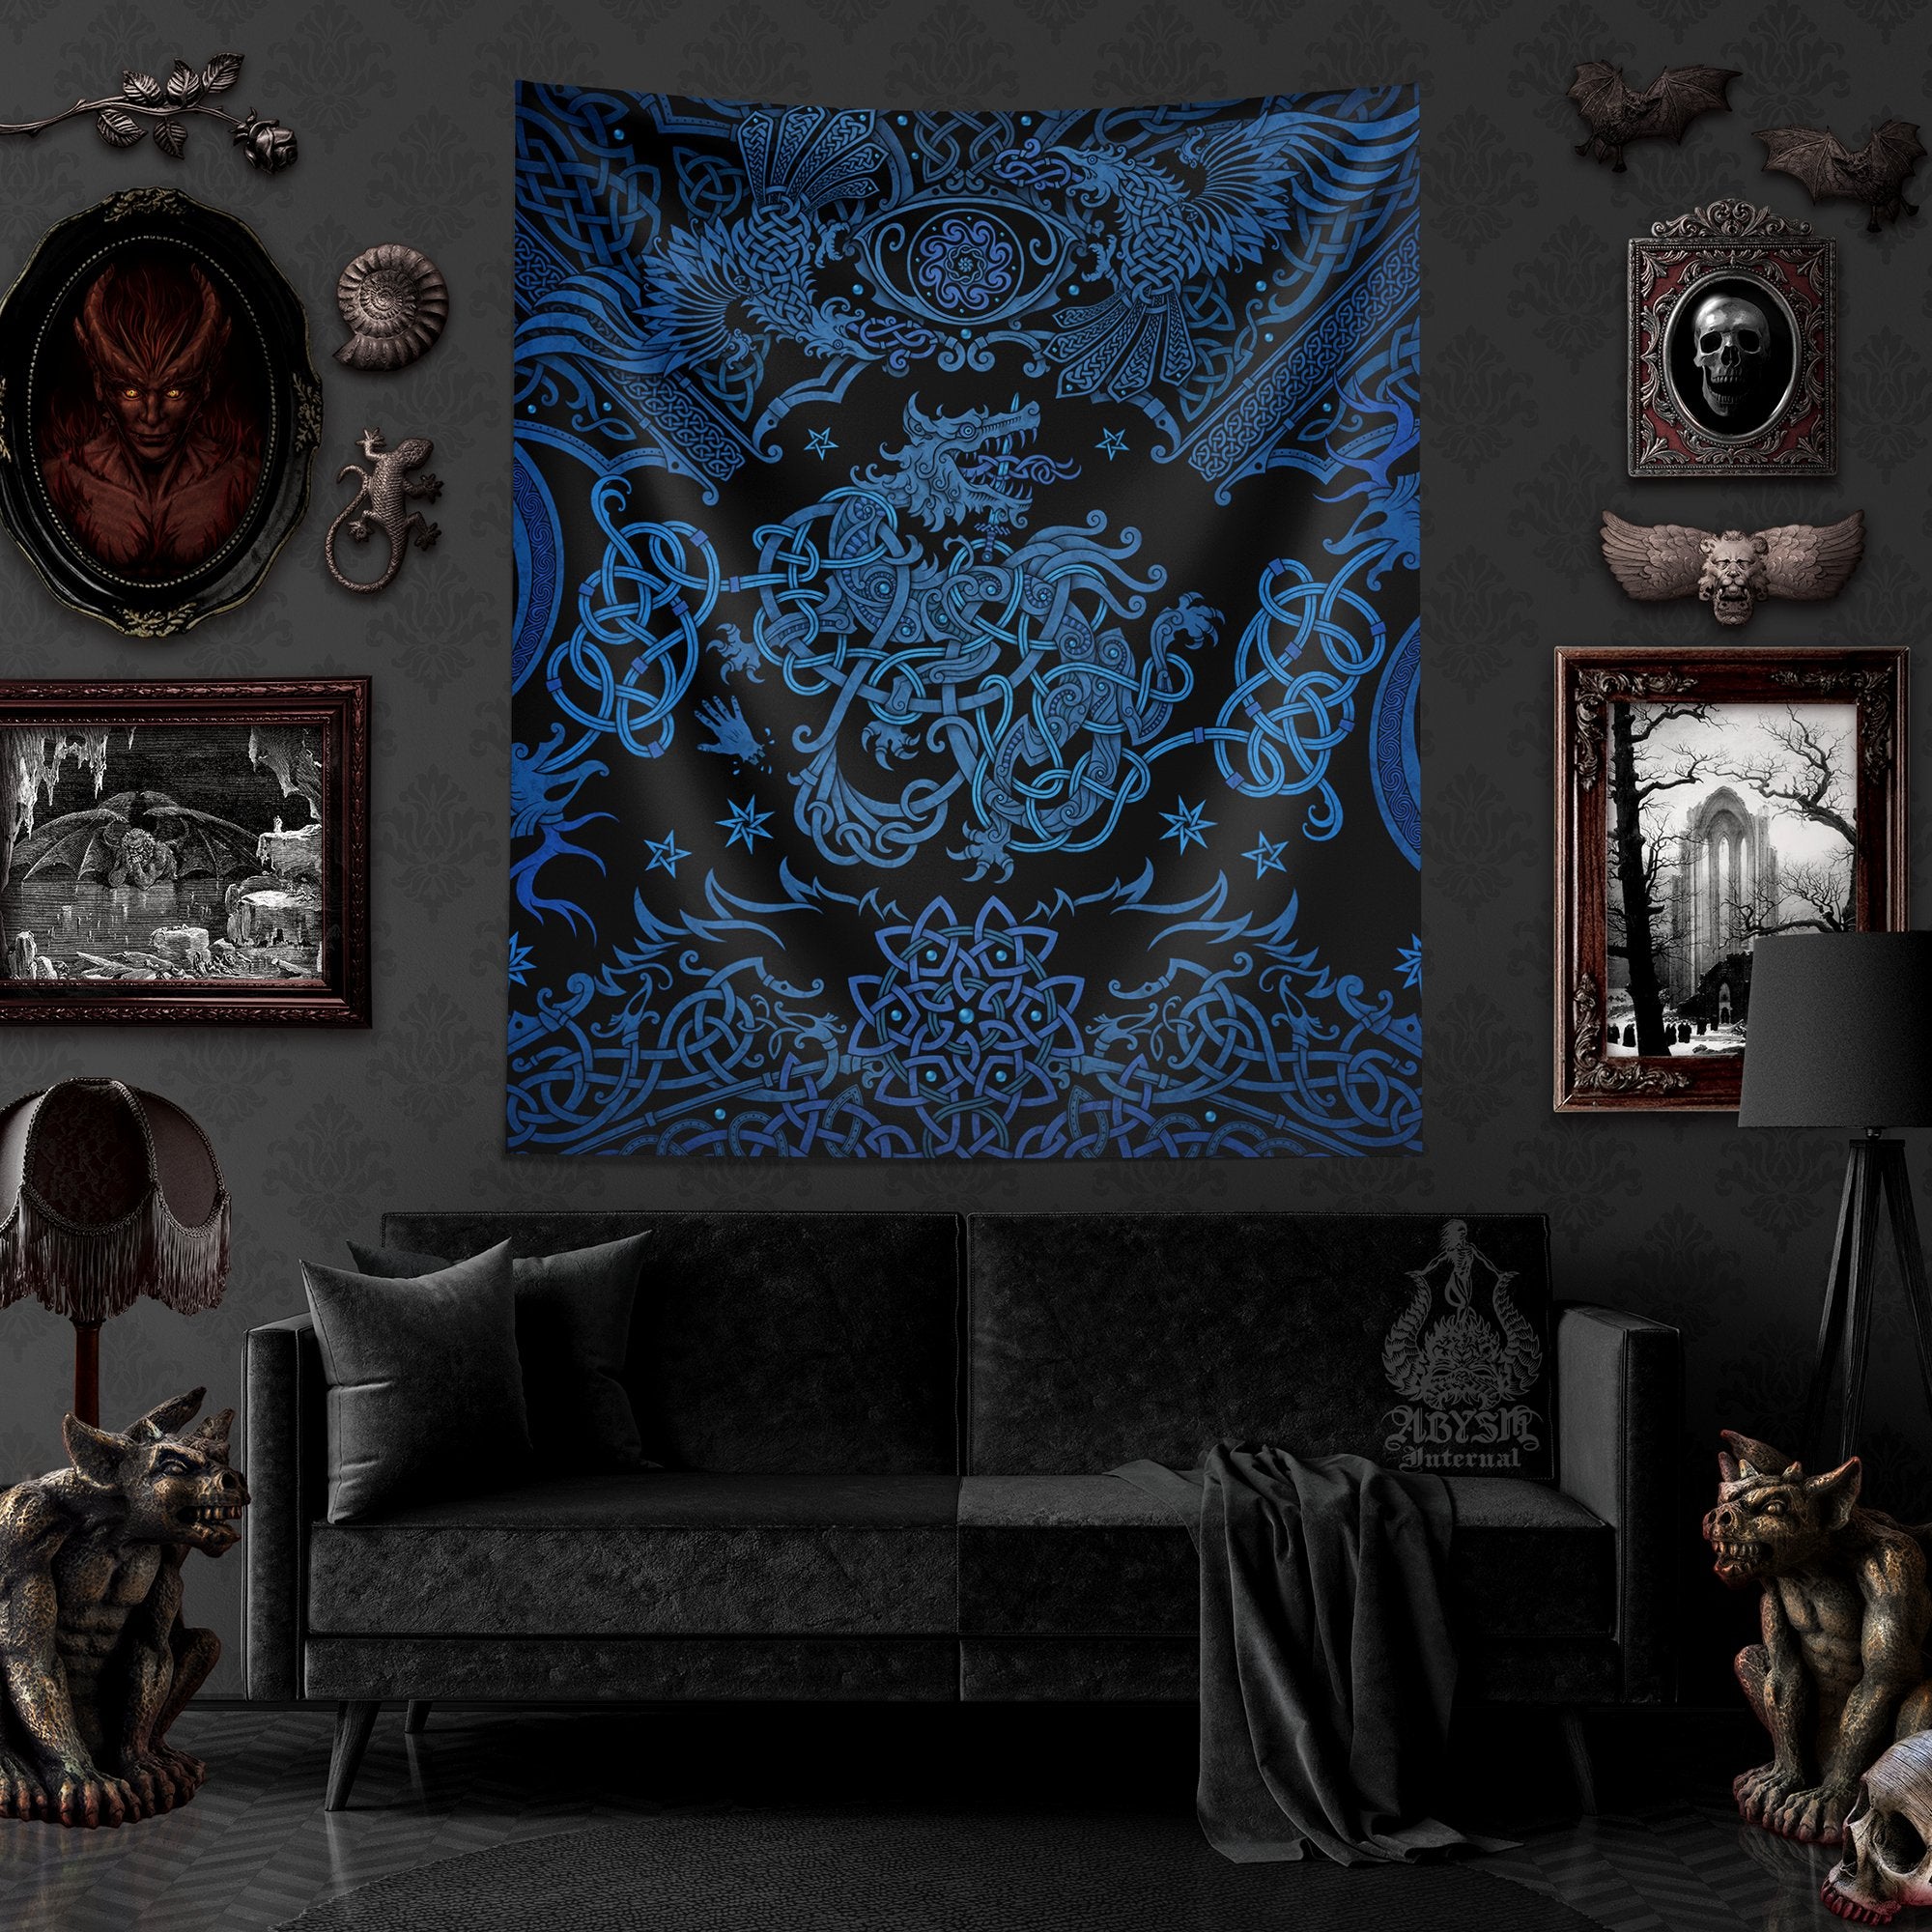 Fenrir Tapestry, Norse Wolf Wall Hanging, Nordic Mythology Art, Viking Home Decor, Vertical Print - Blue Black - Abysm Internal